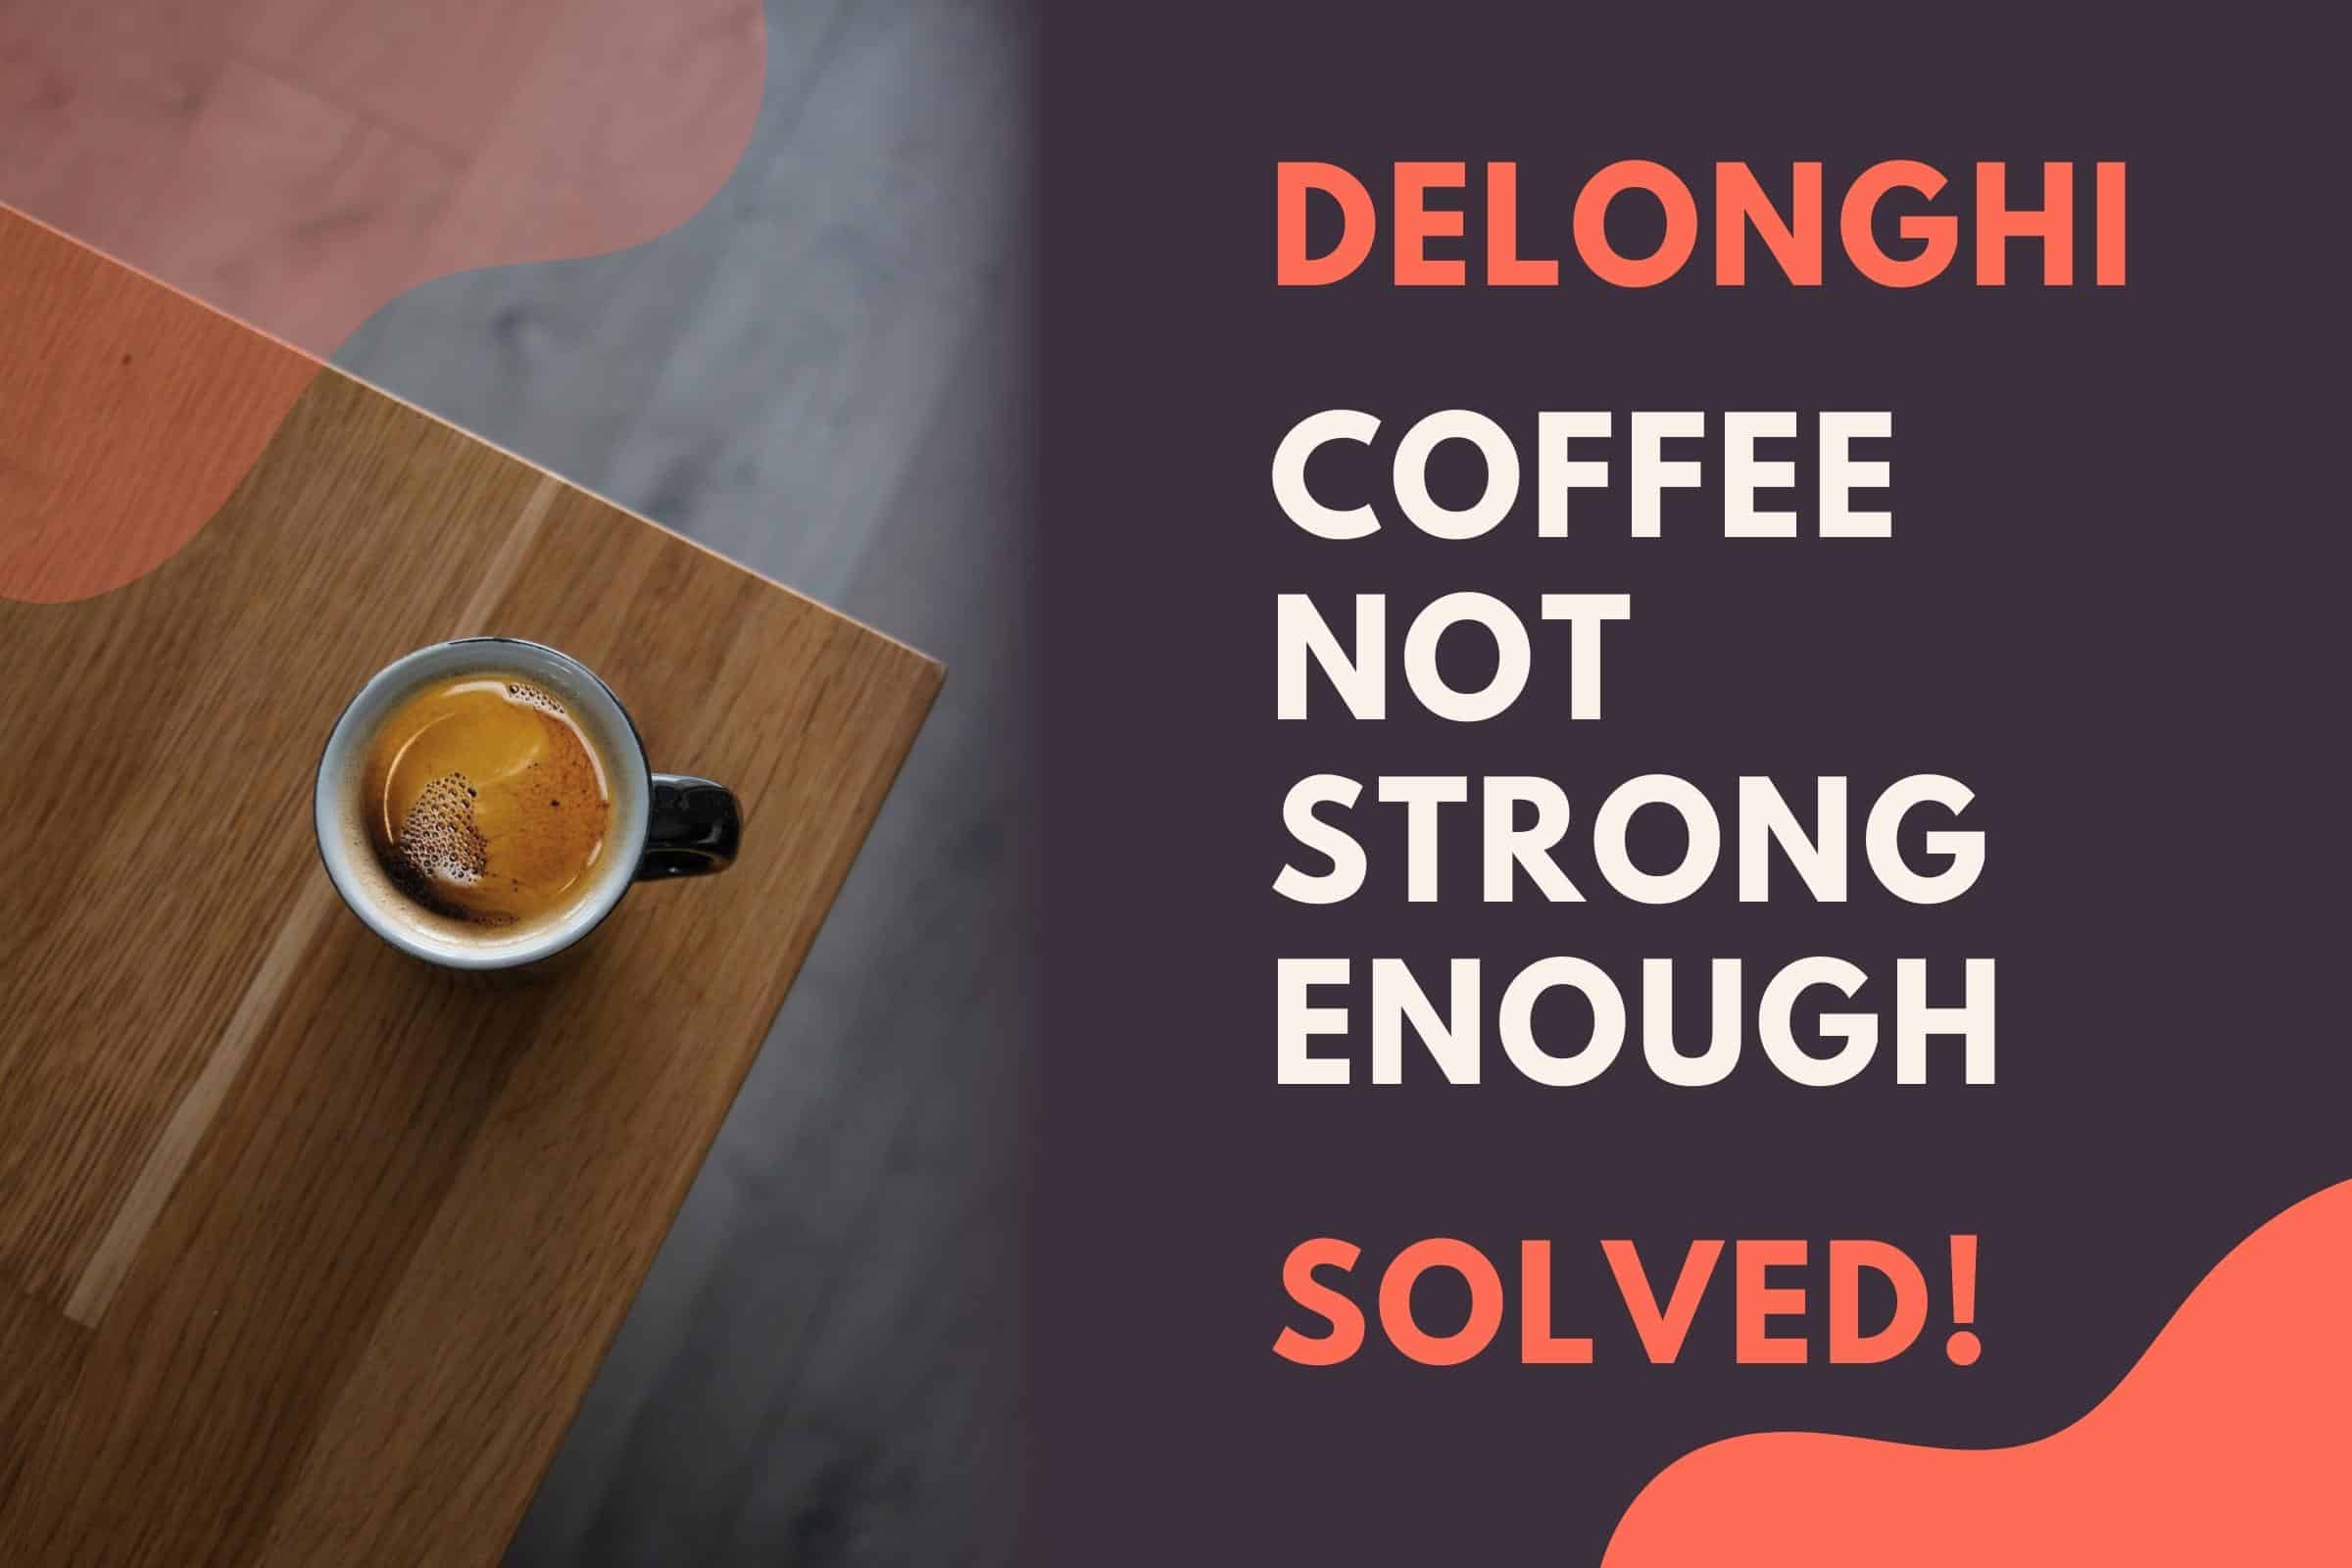 Delonghi coffee not strong enough